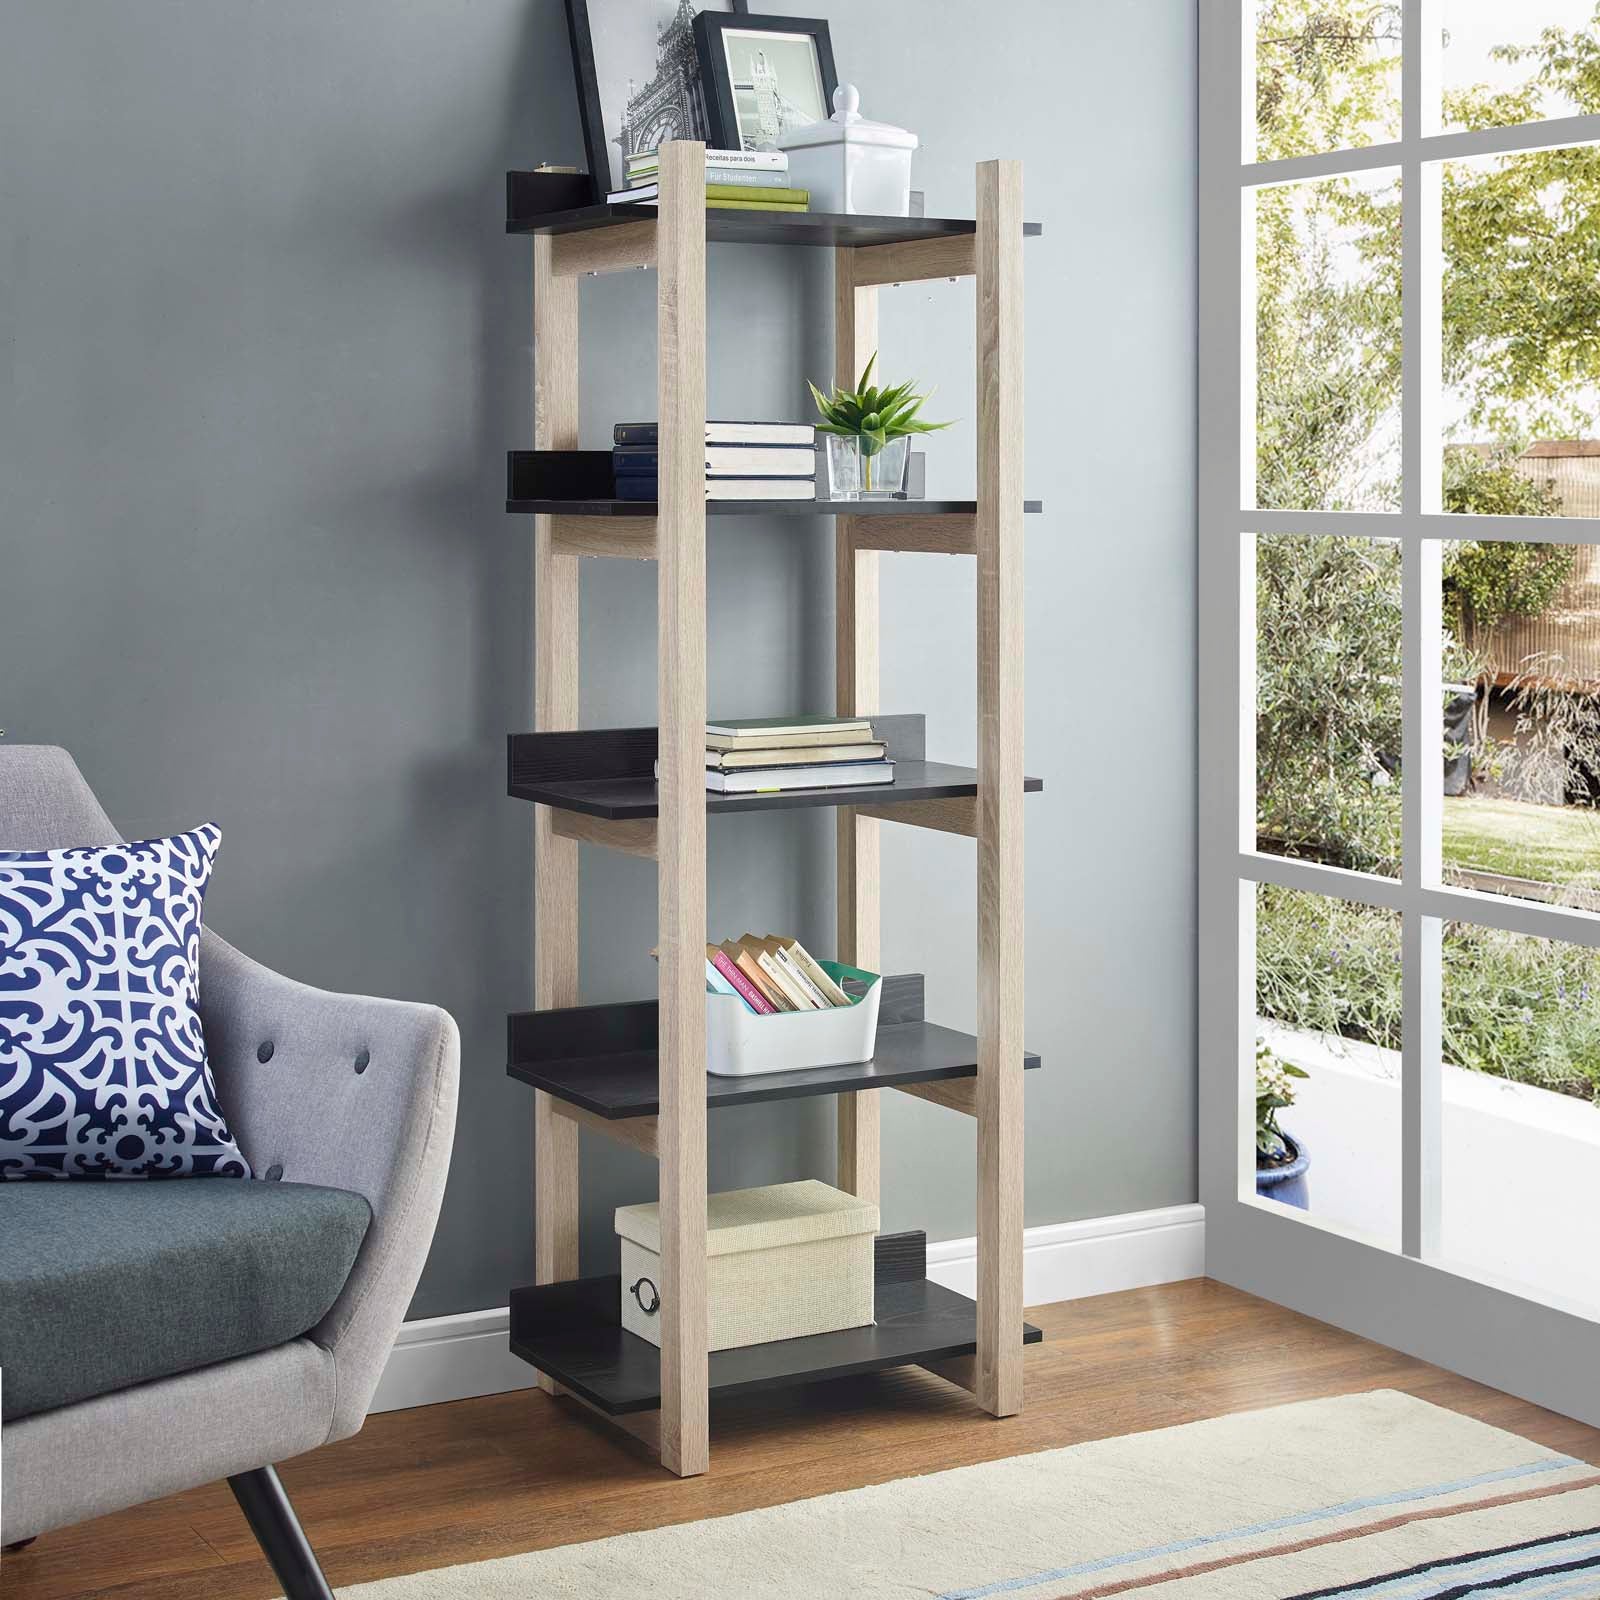 Reprieve Bookcase - East Shore Modern Home Furnishings